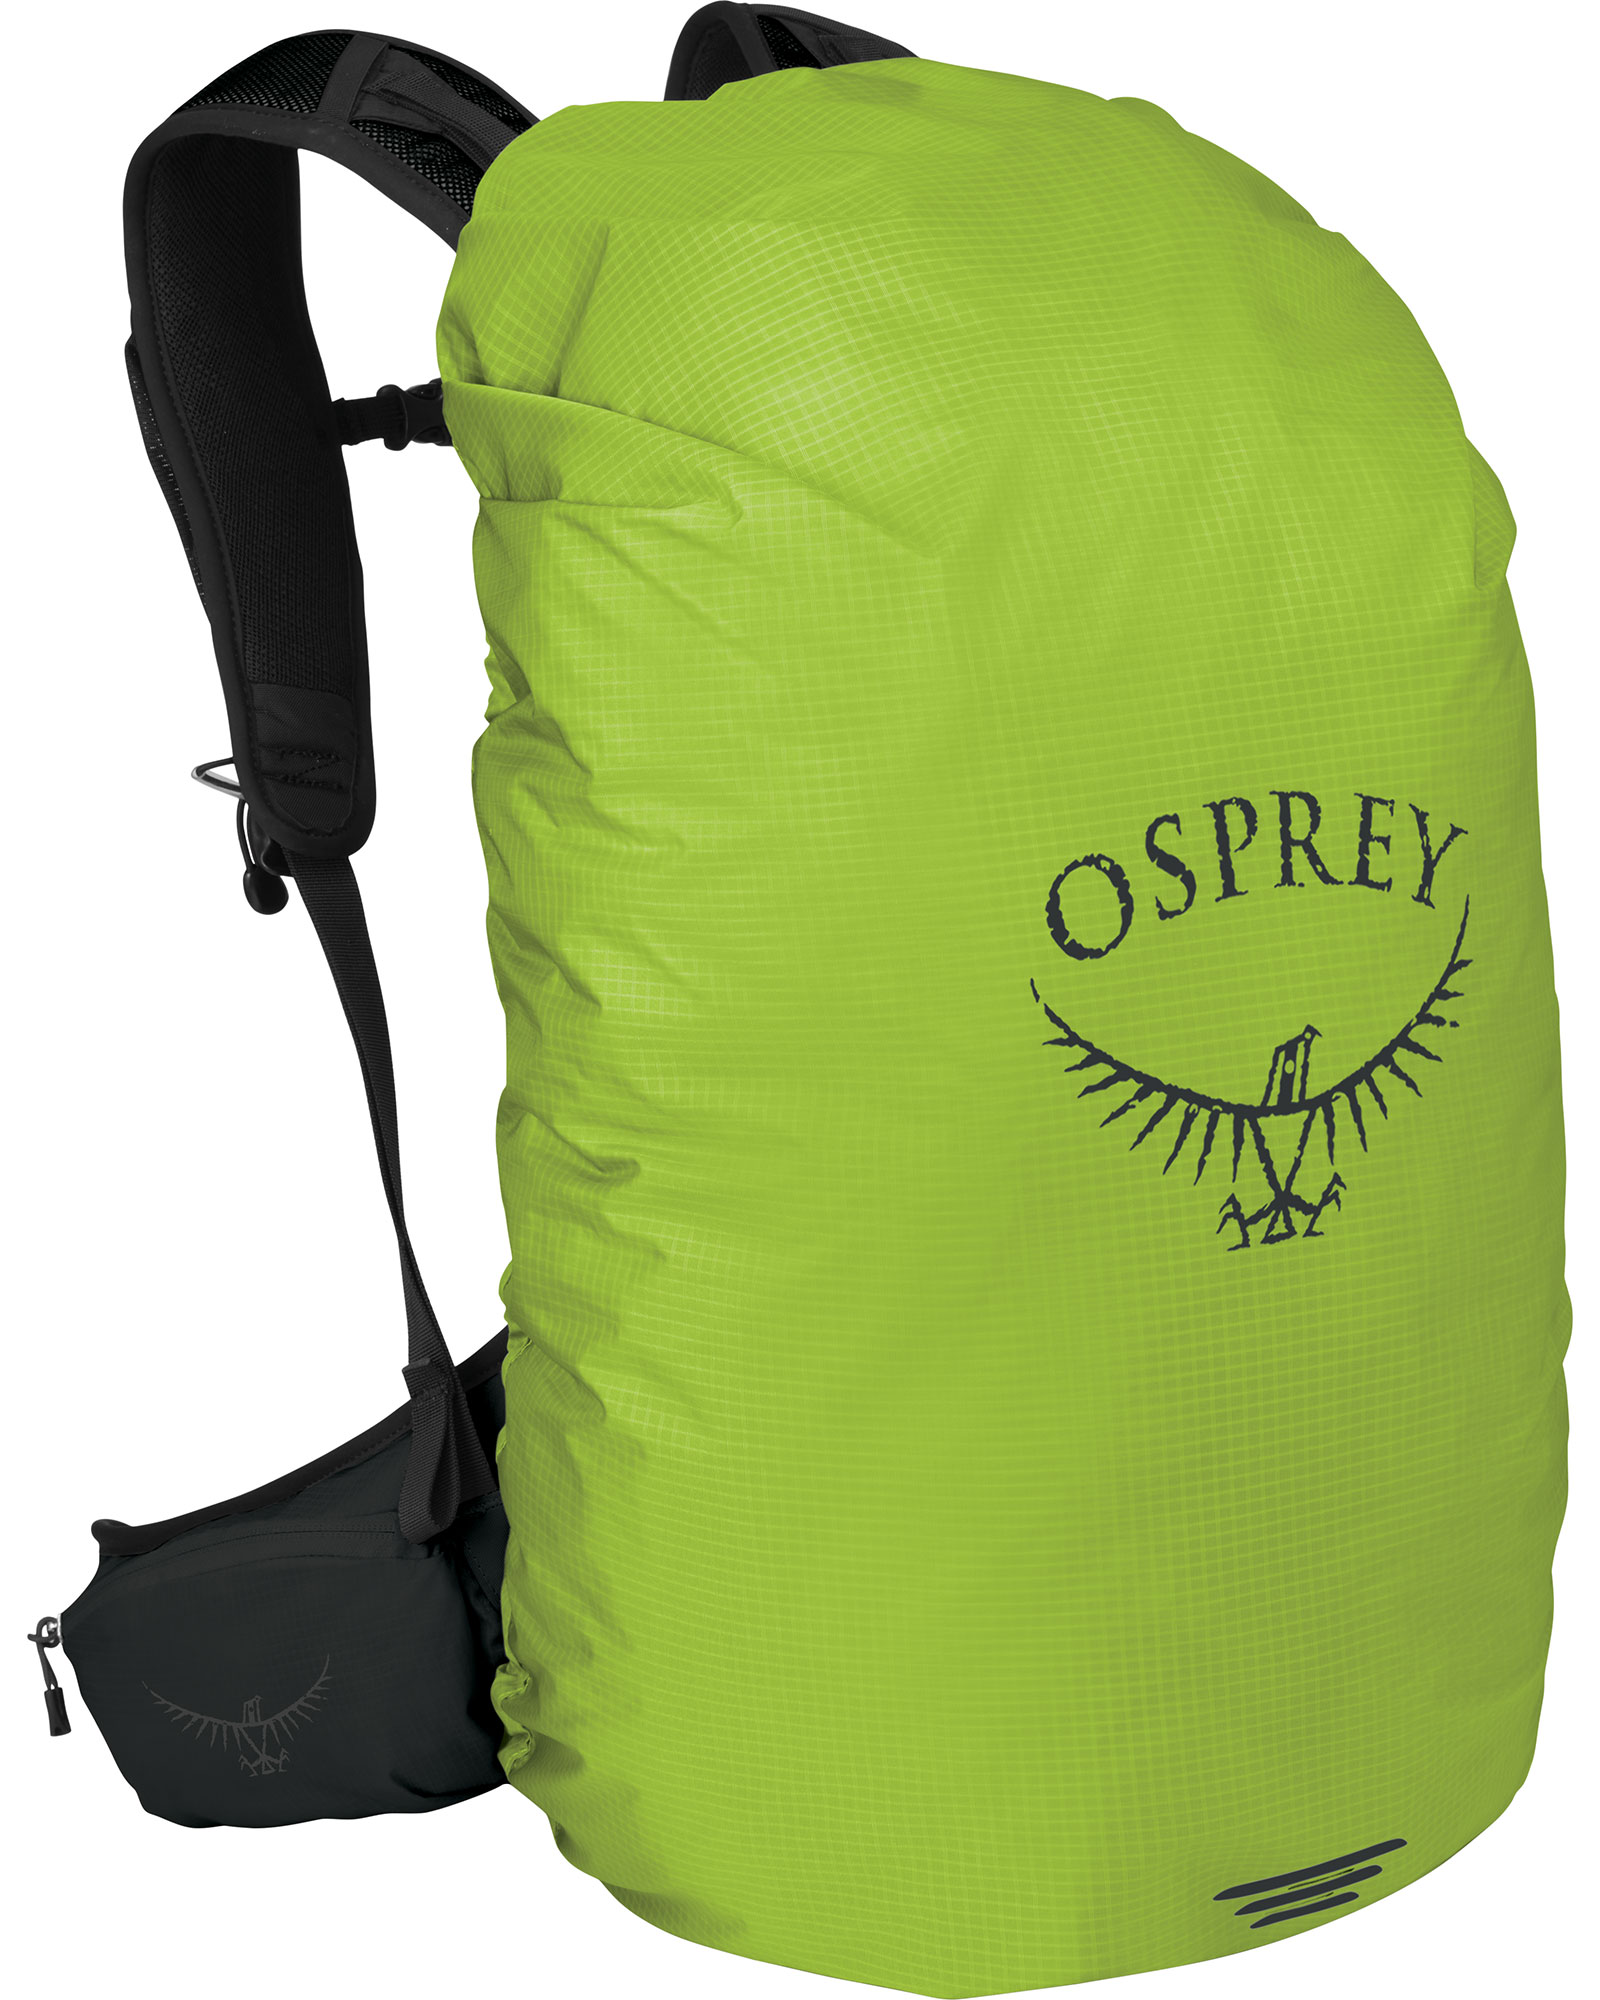 Osprey Hi Vis Raincover Small - Limon Green